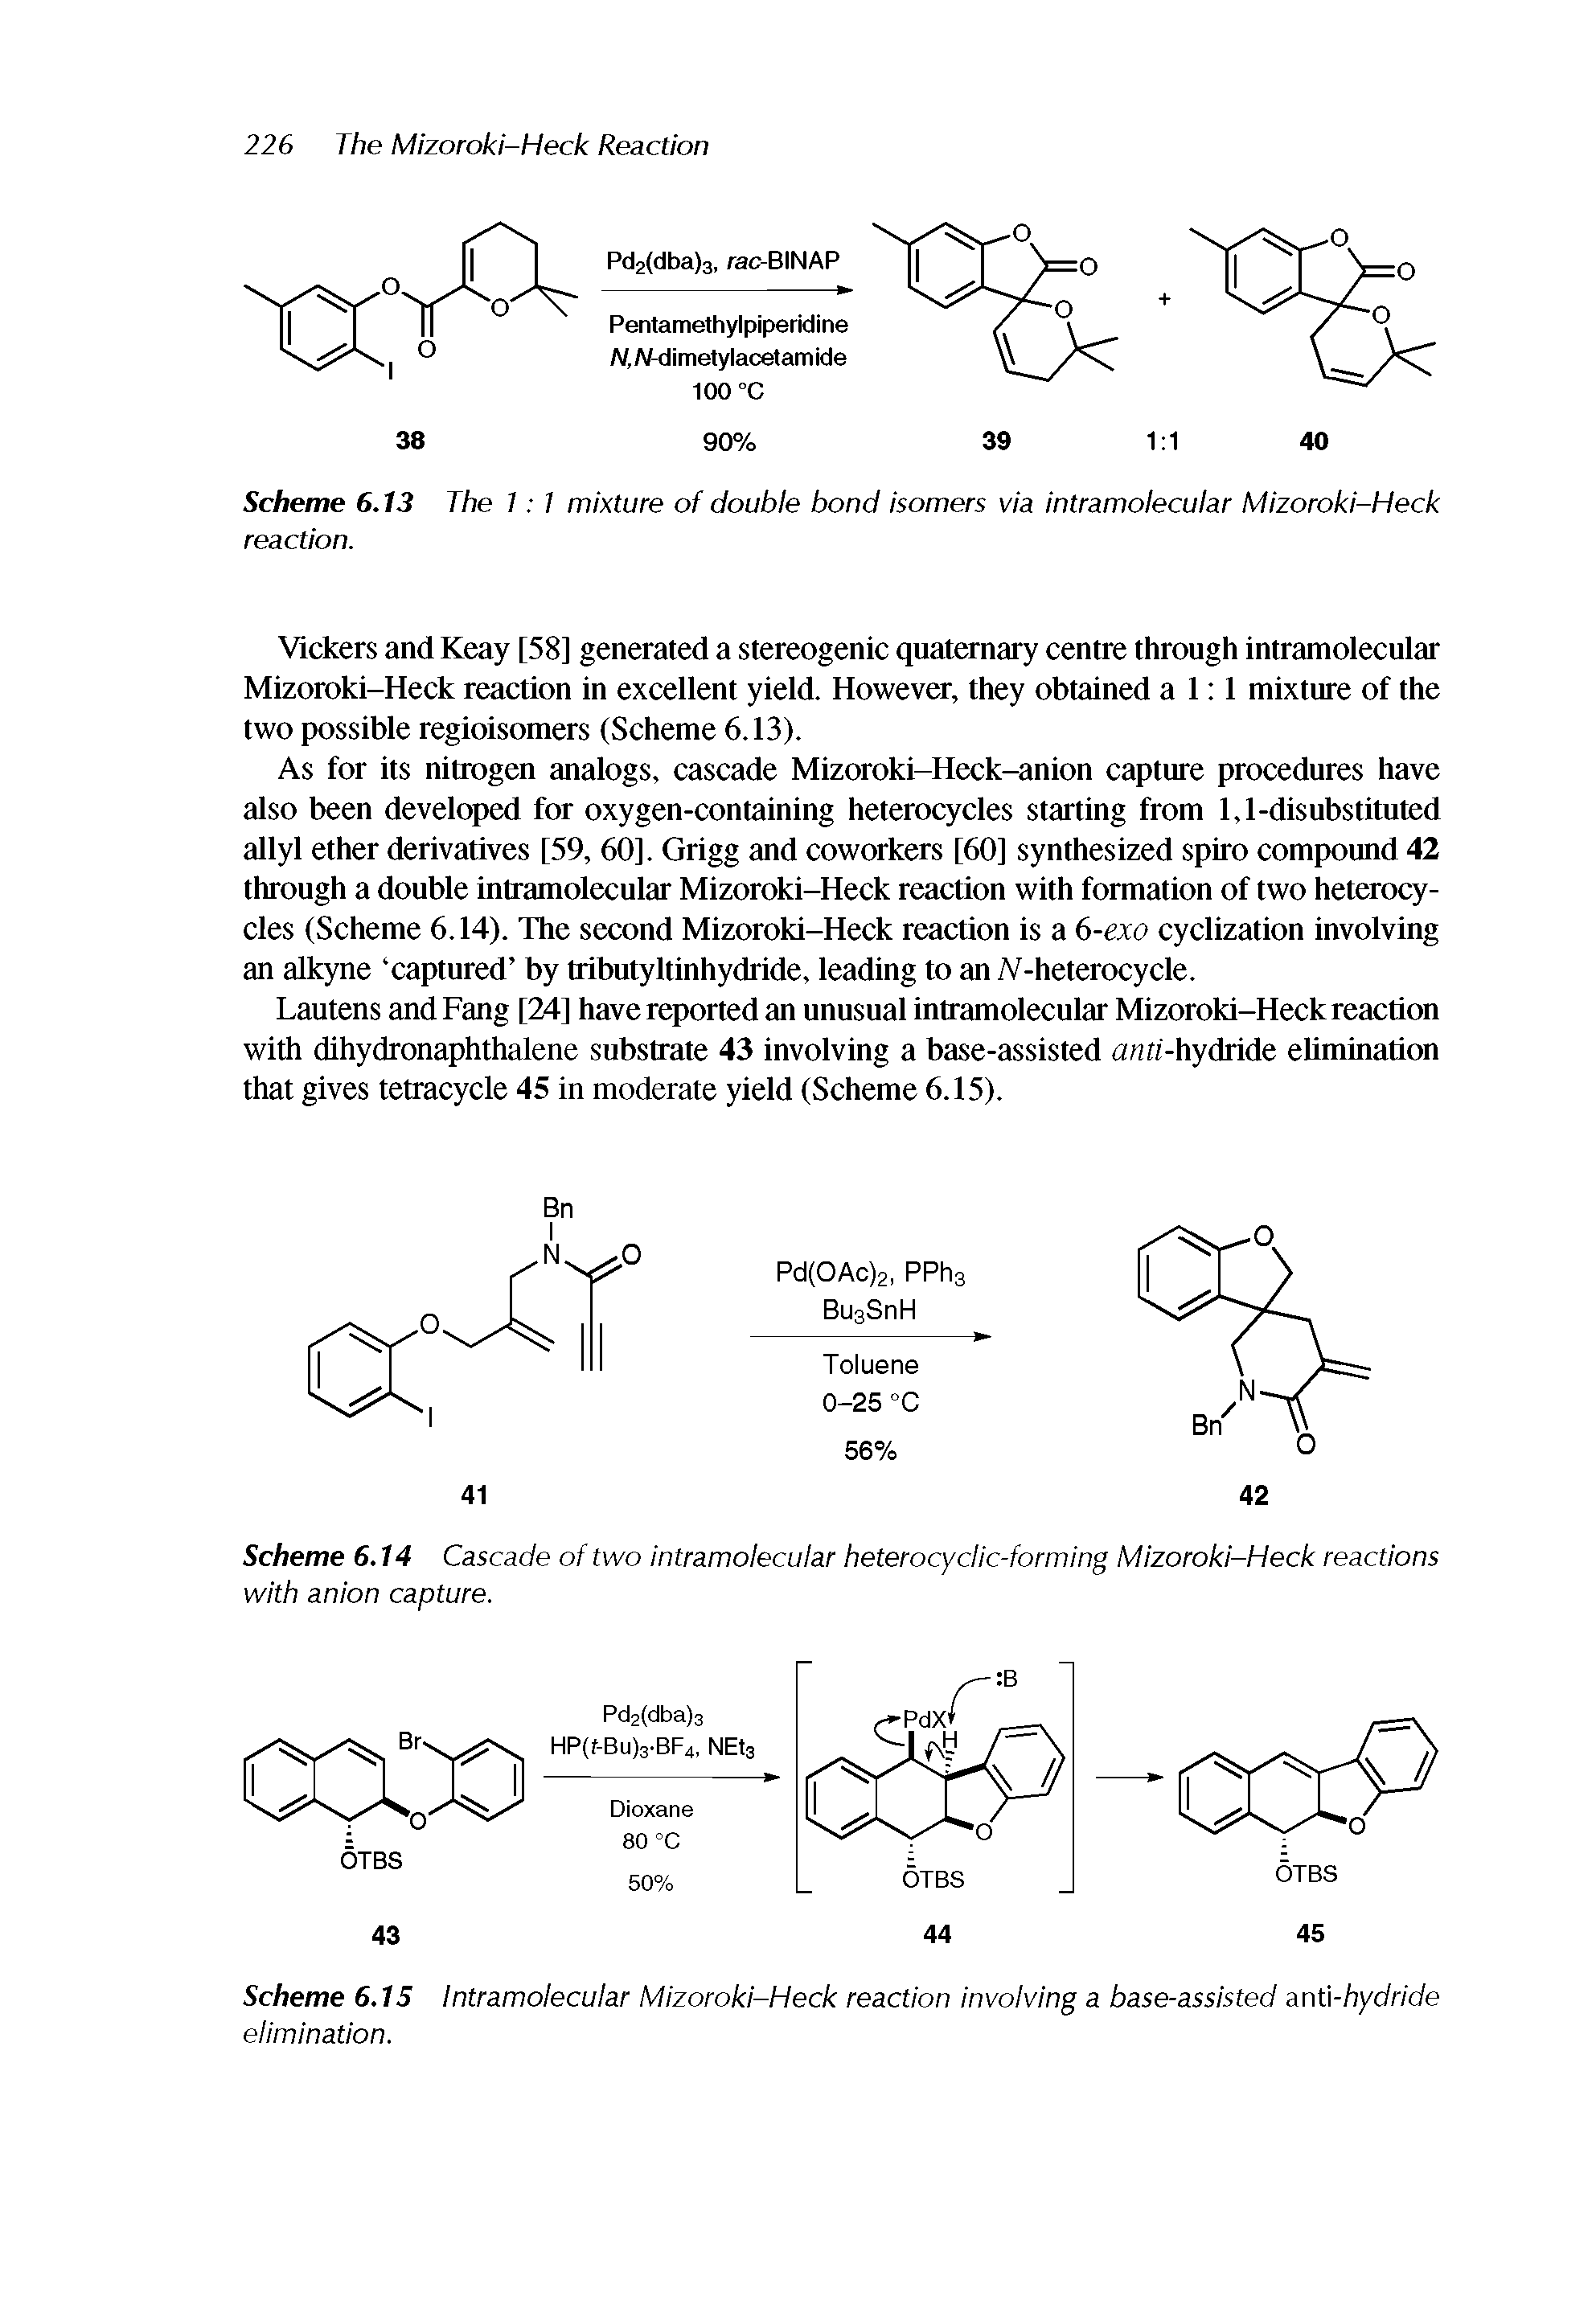 Scheme 6.13 The 1 1 mixture of double bond isomers via intramolecular Mizoroki-Heck reaction.